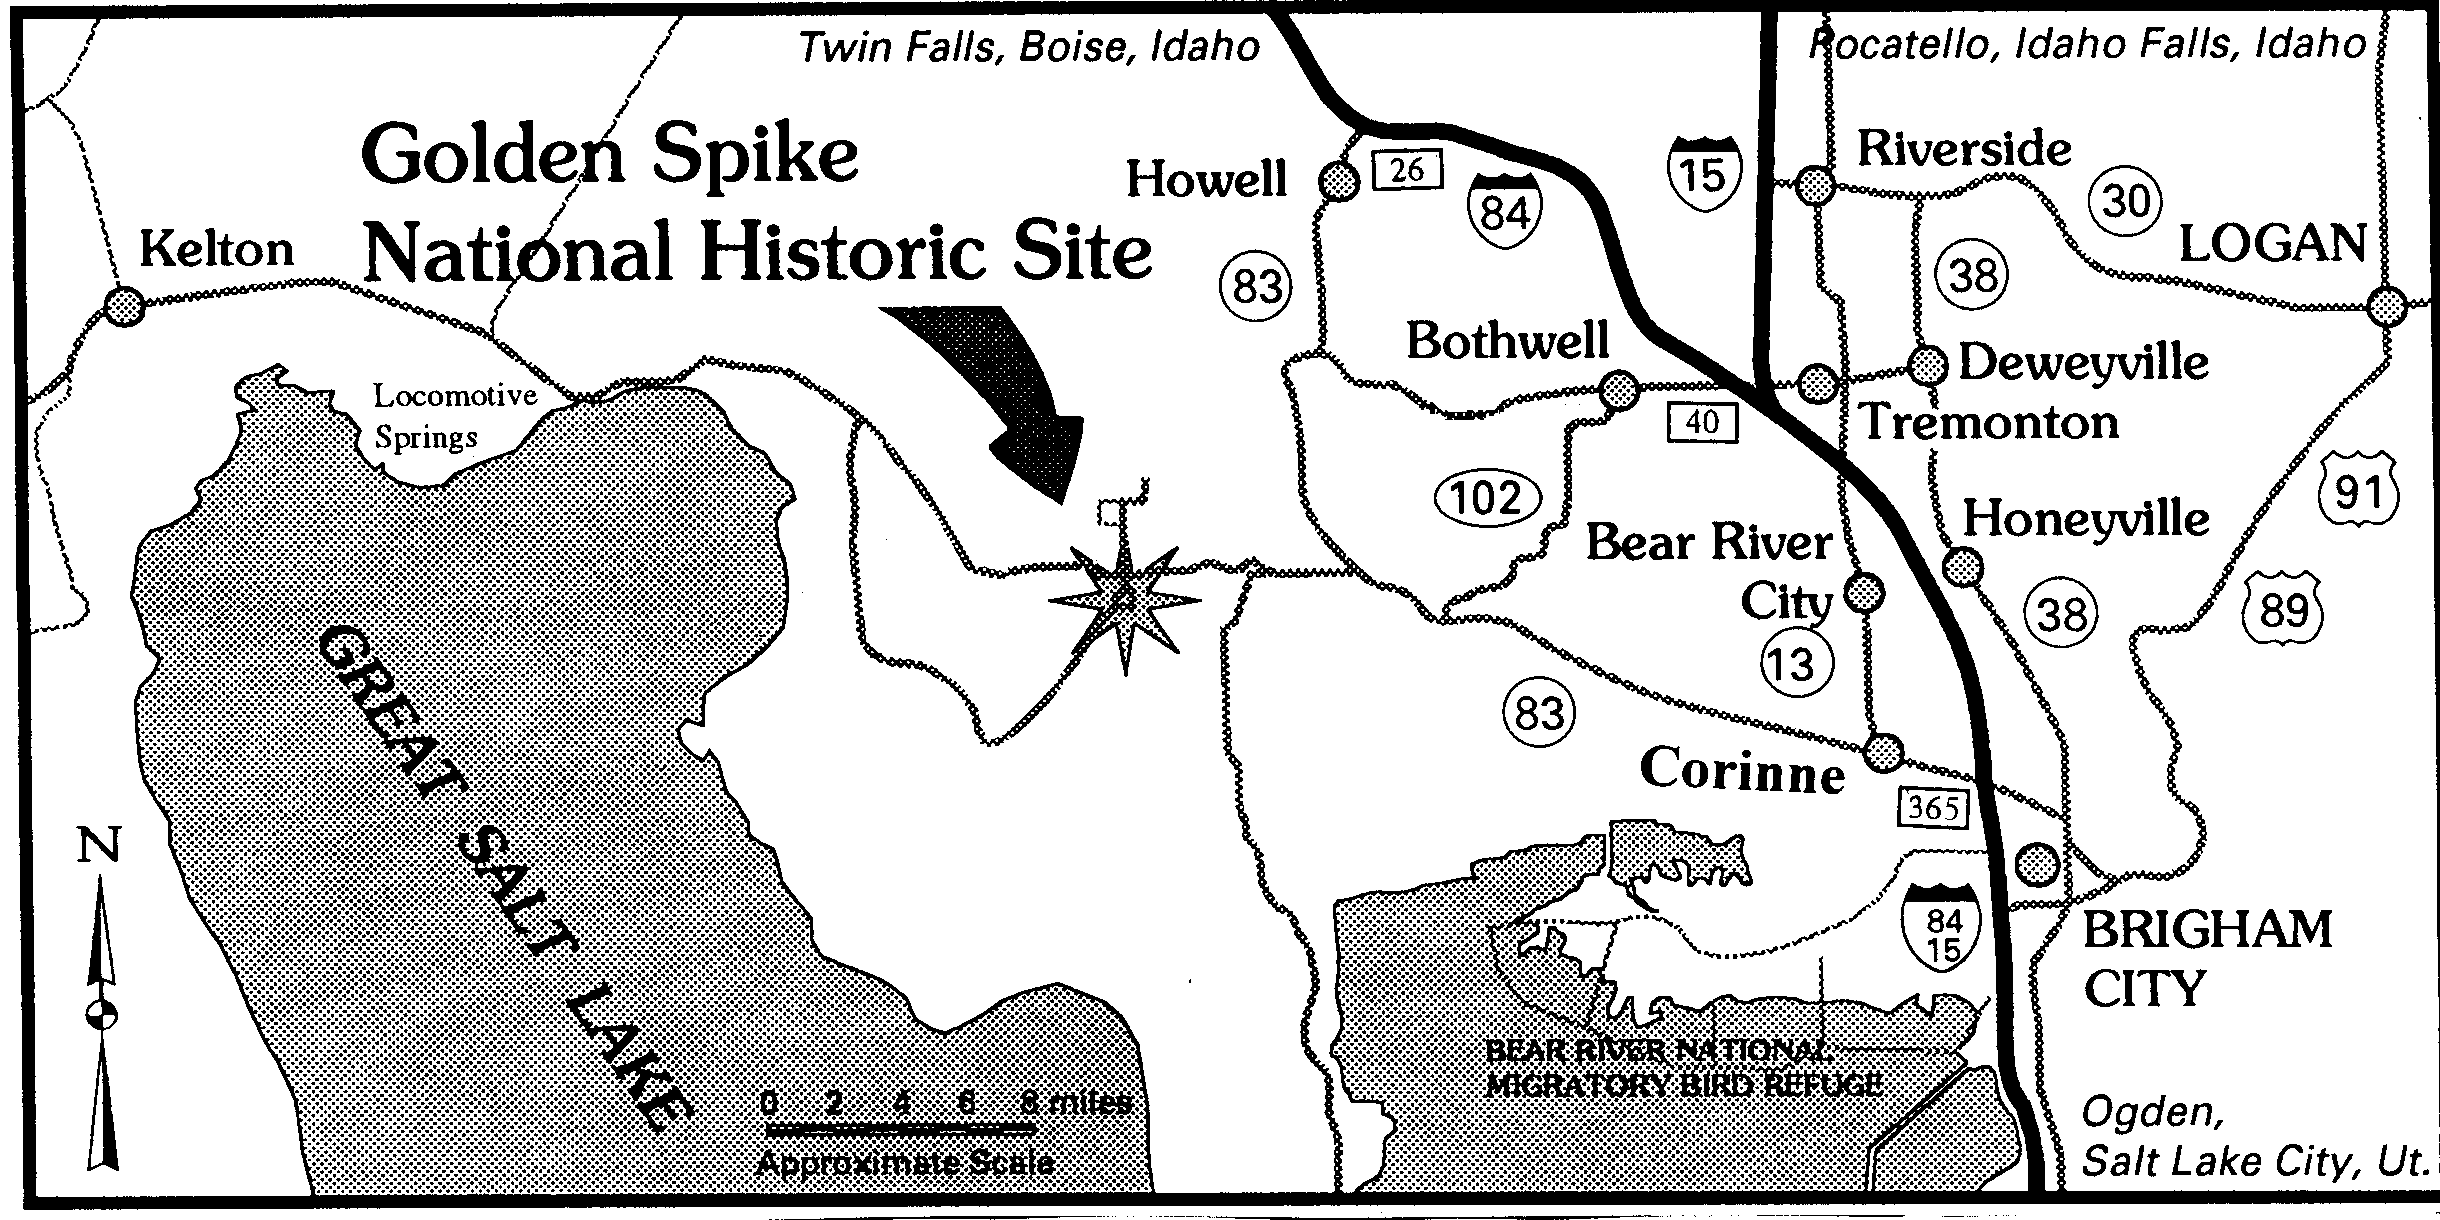 Golden Spike Historic Site, trains, transcontinental railroad